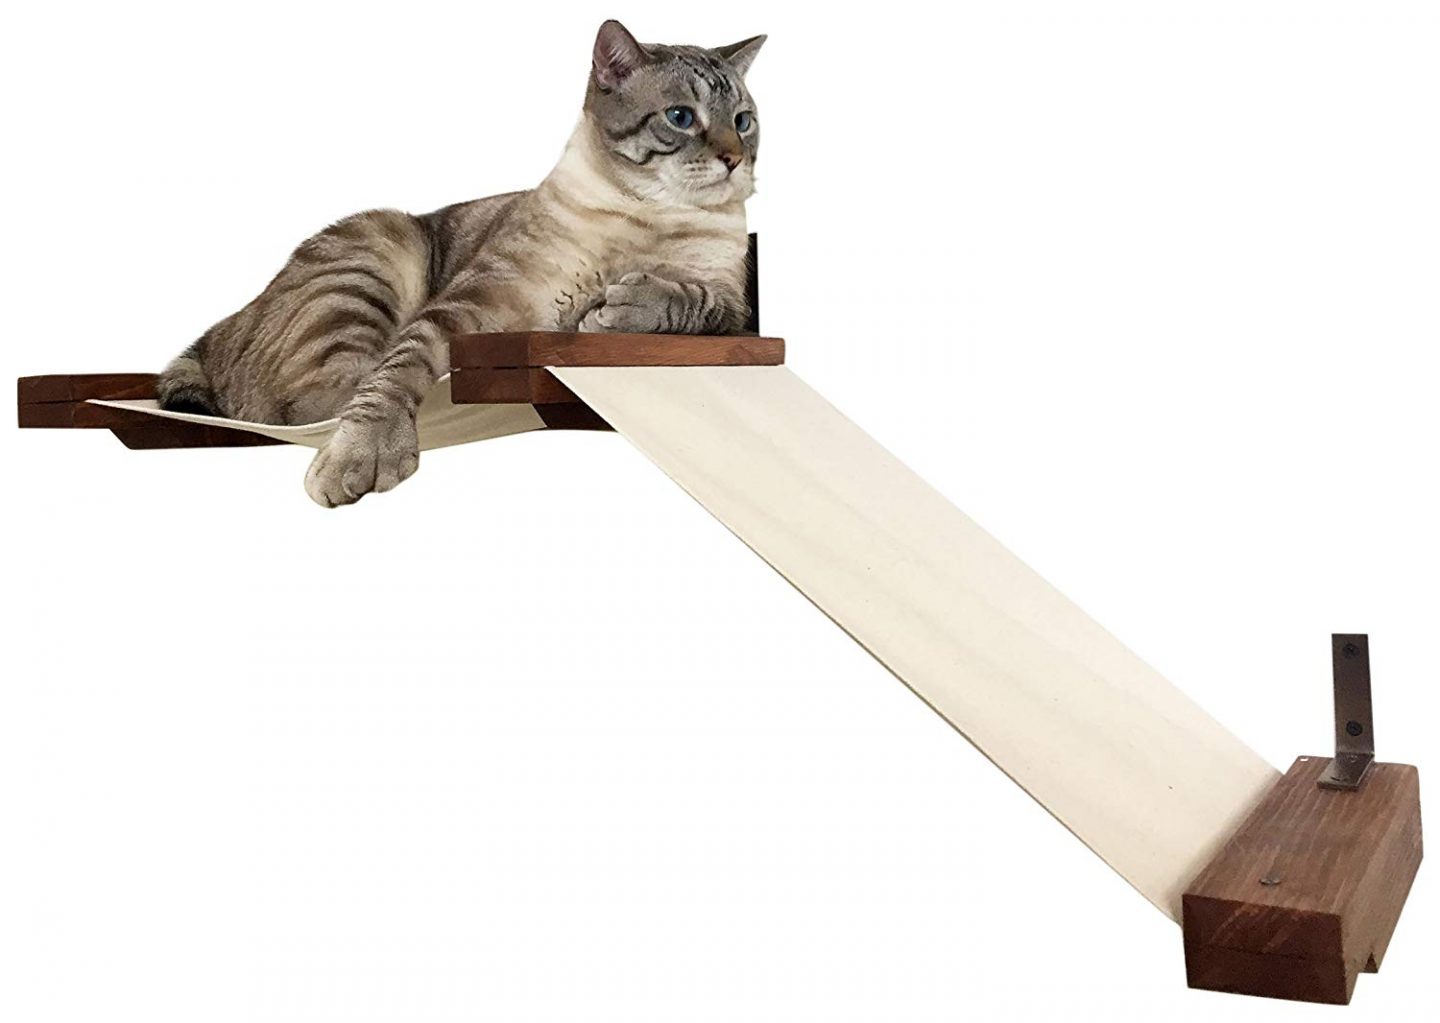 A cat fabric raceway and hammock